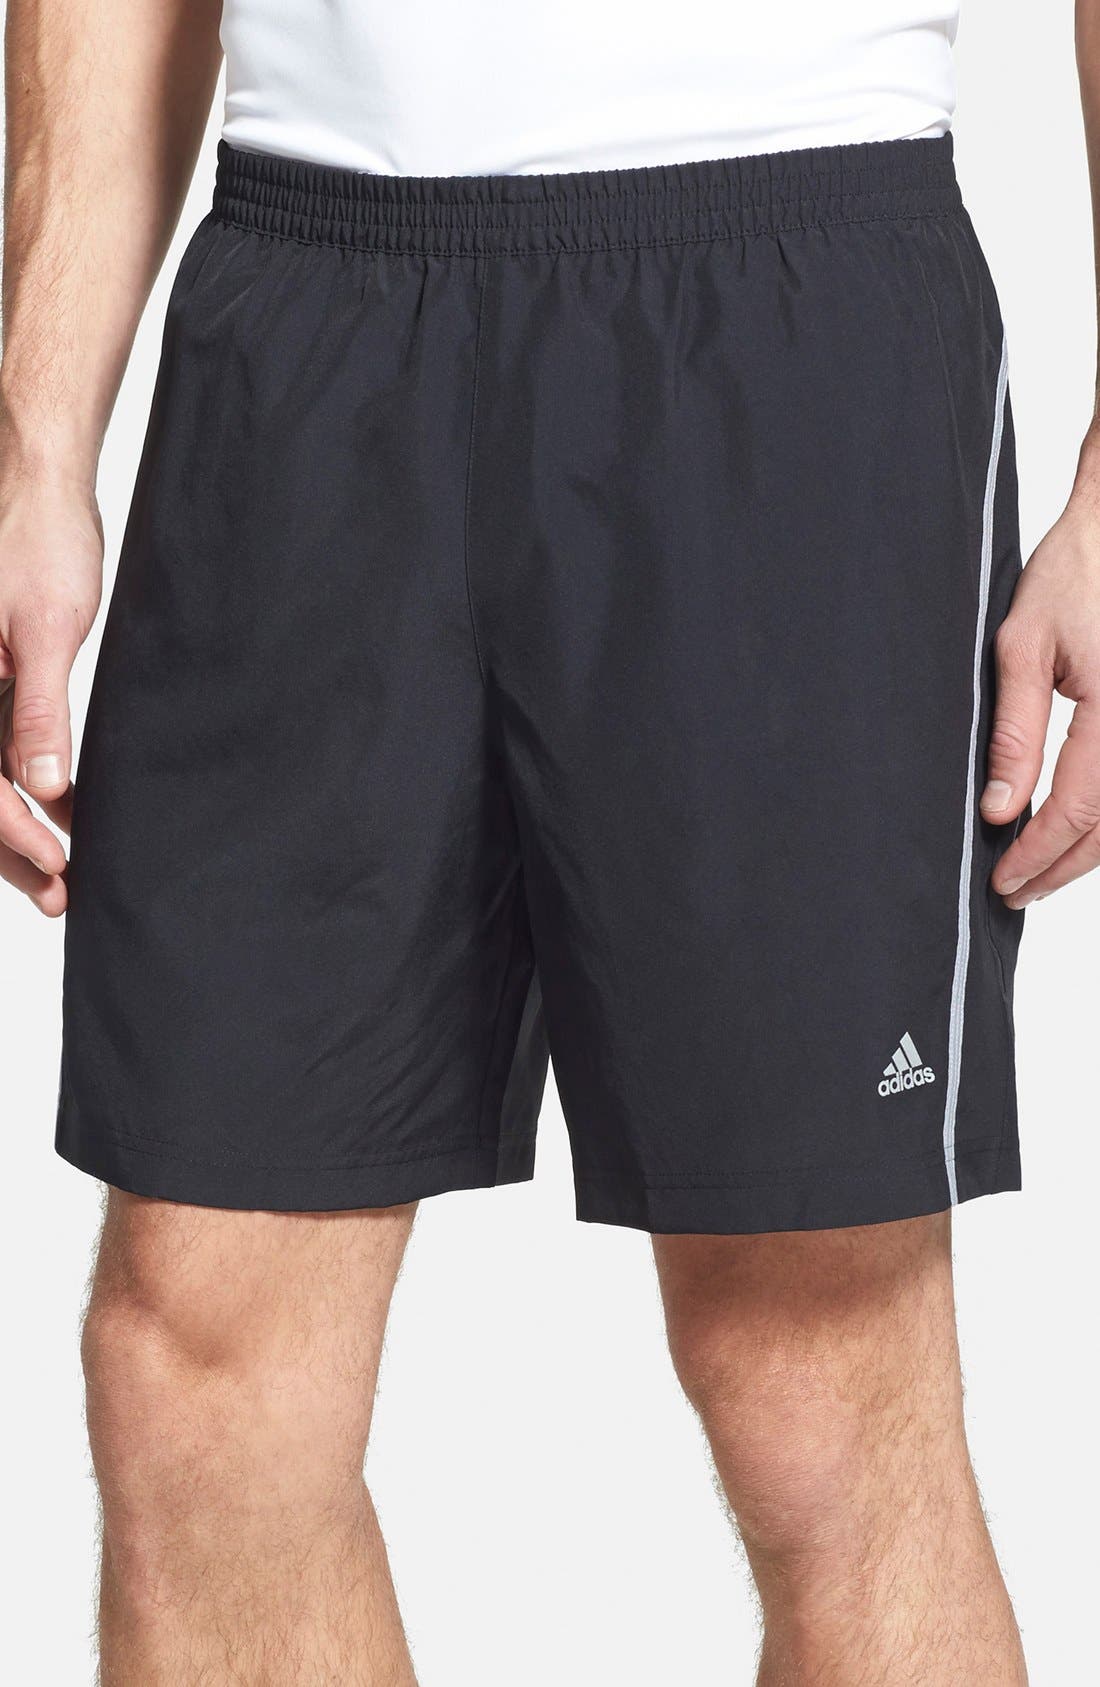 adidas shorts 7 inseam